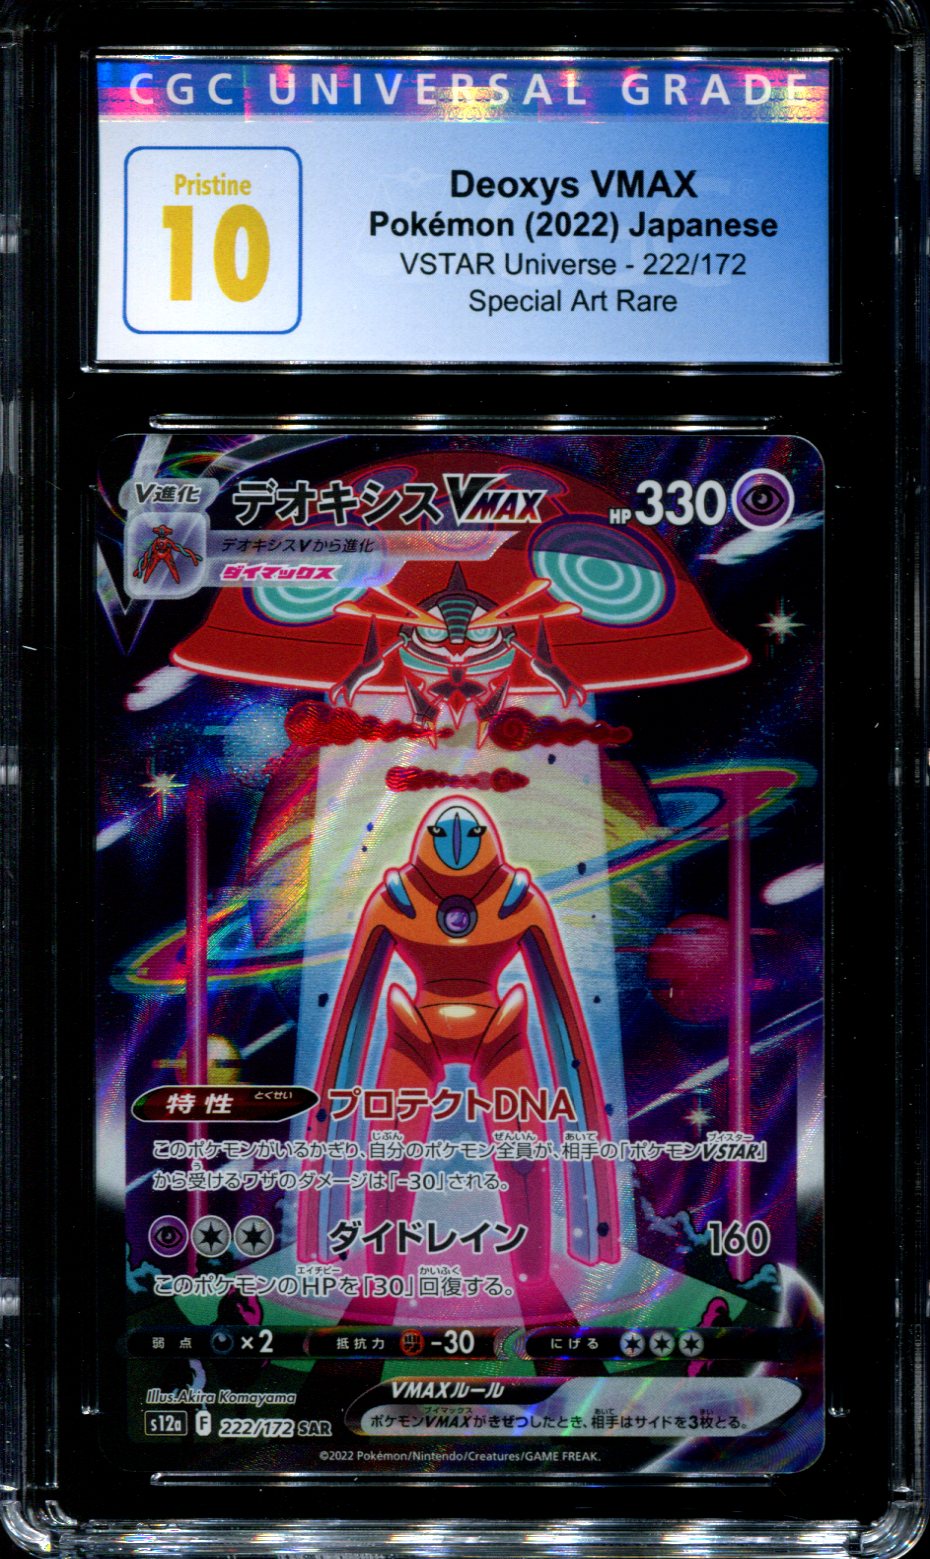 Deoxys VMAX SAR 222/172 VSTAR Universe - Pokemon TCG Japanese